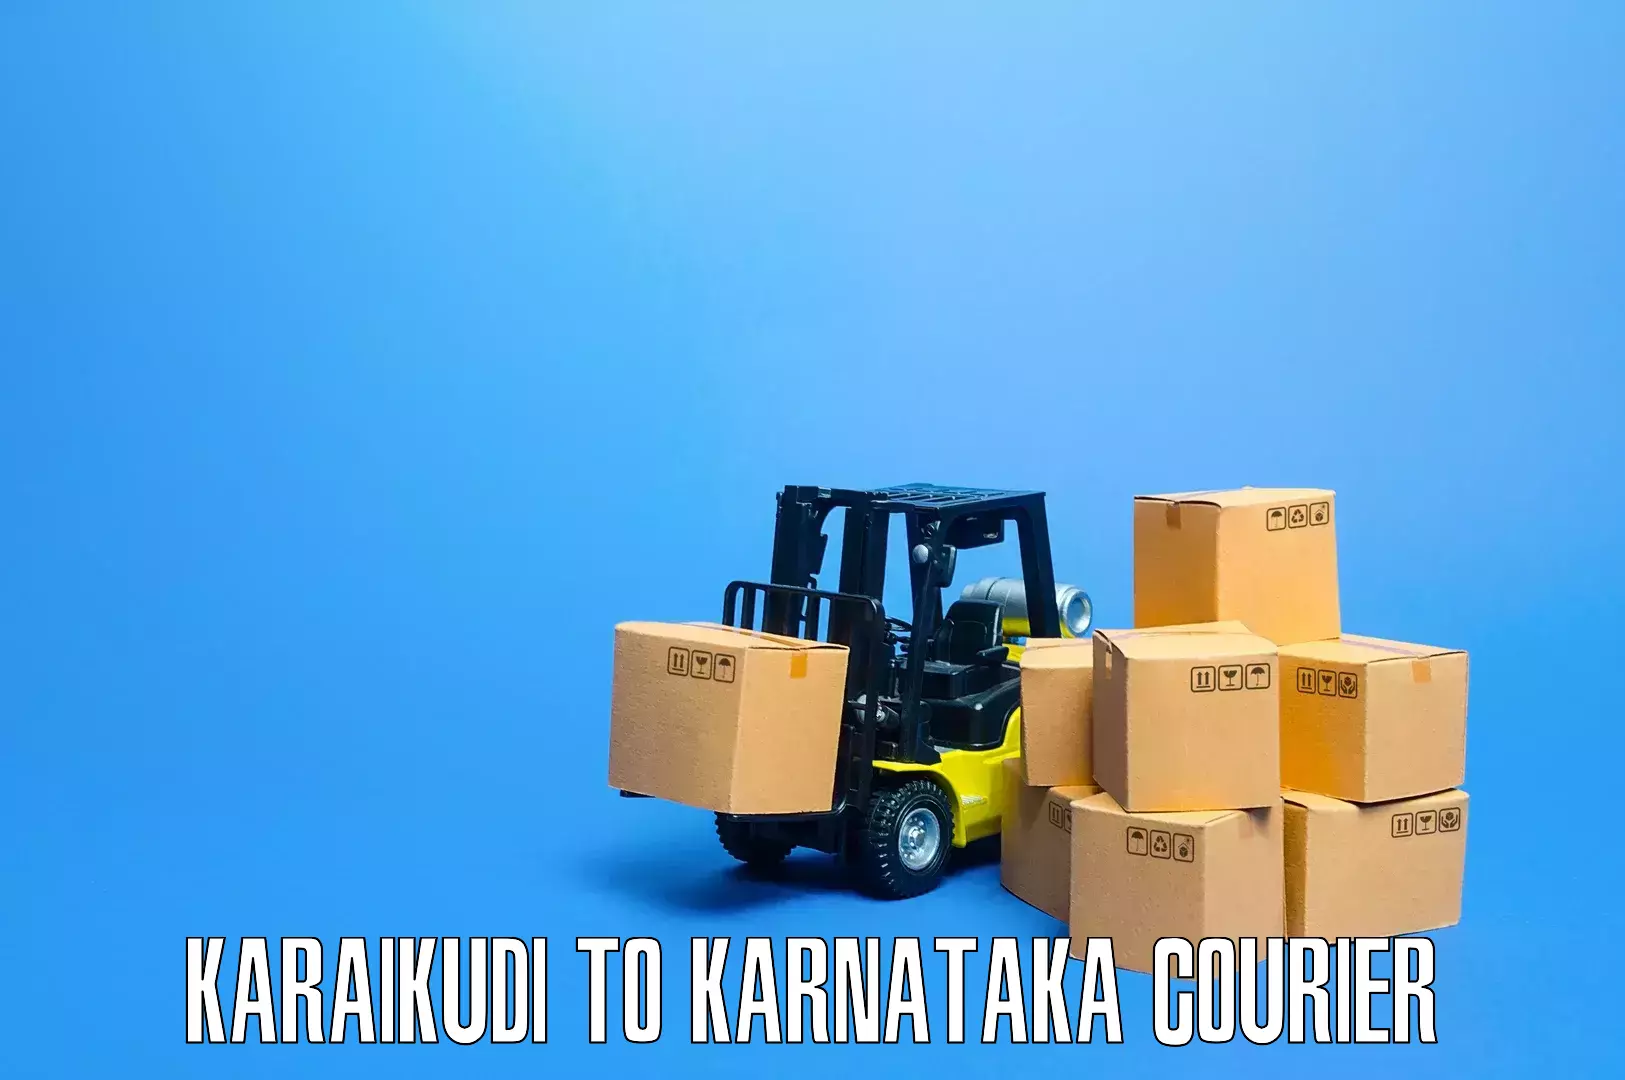 Moving and packing experts in Karaikudi to Hassan